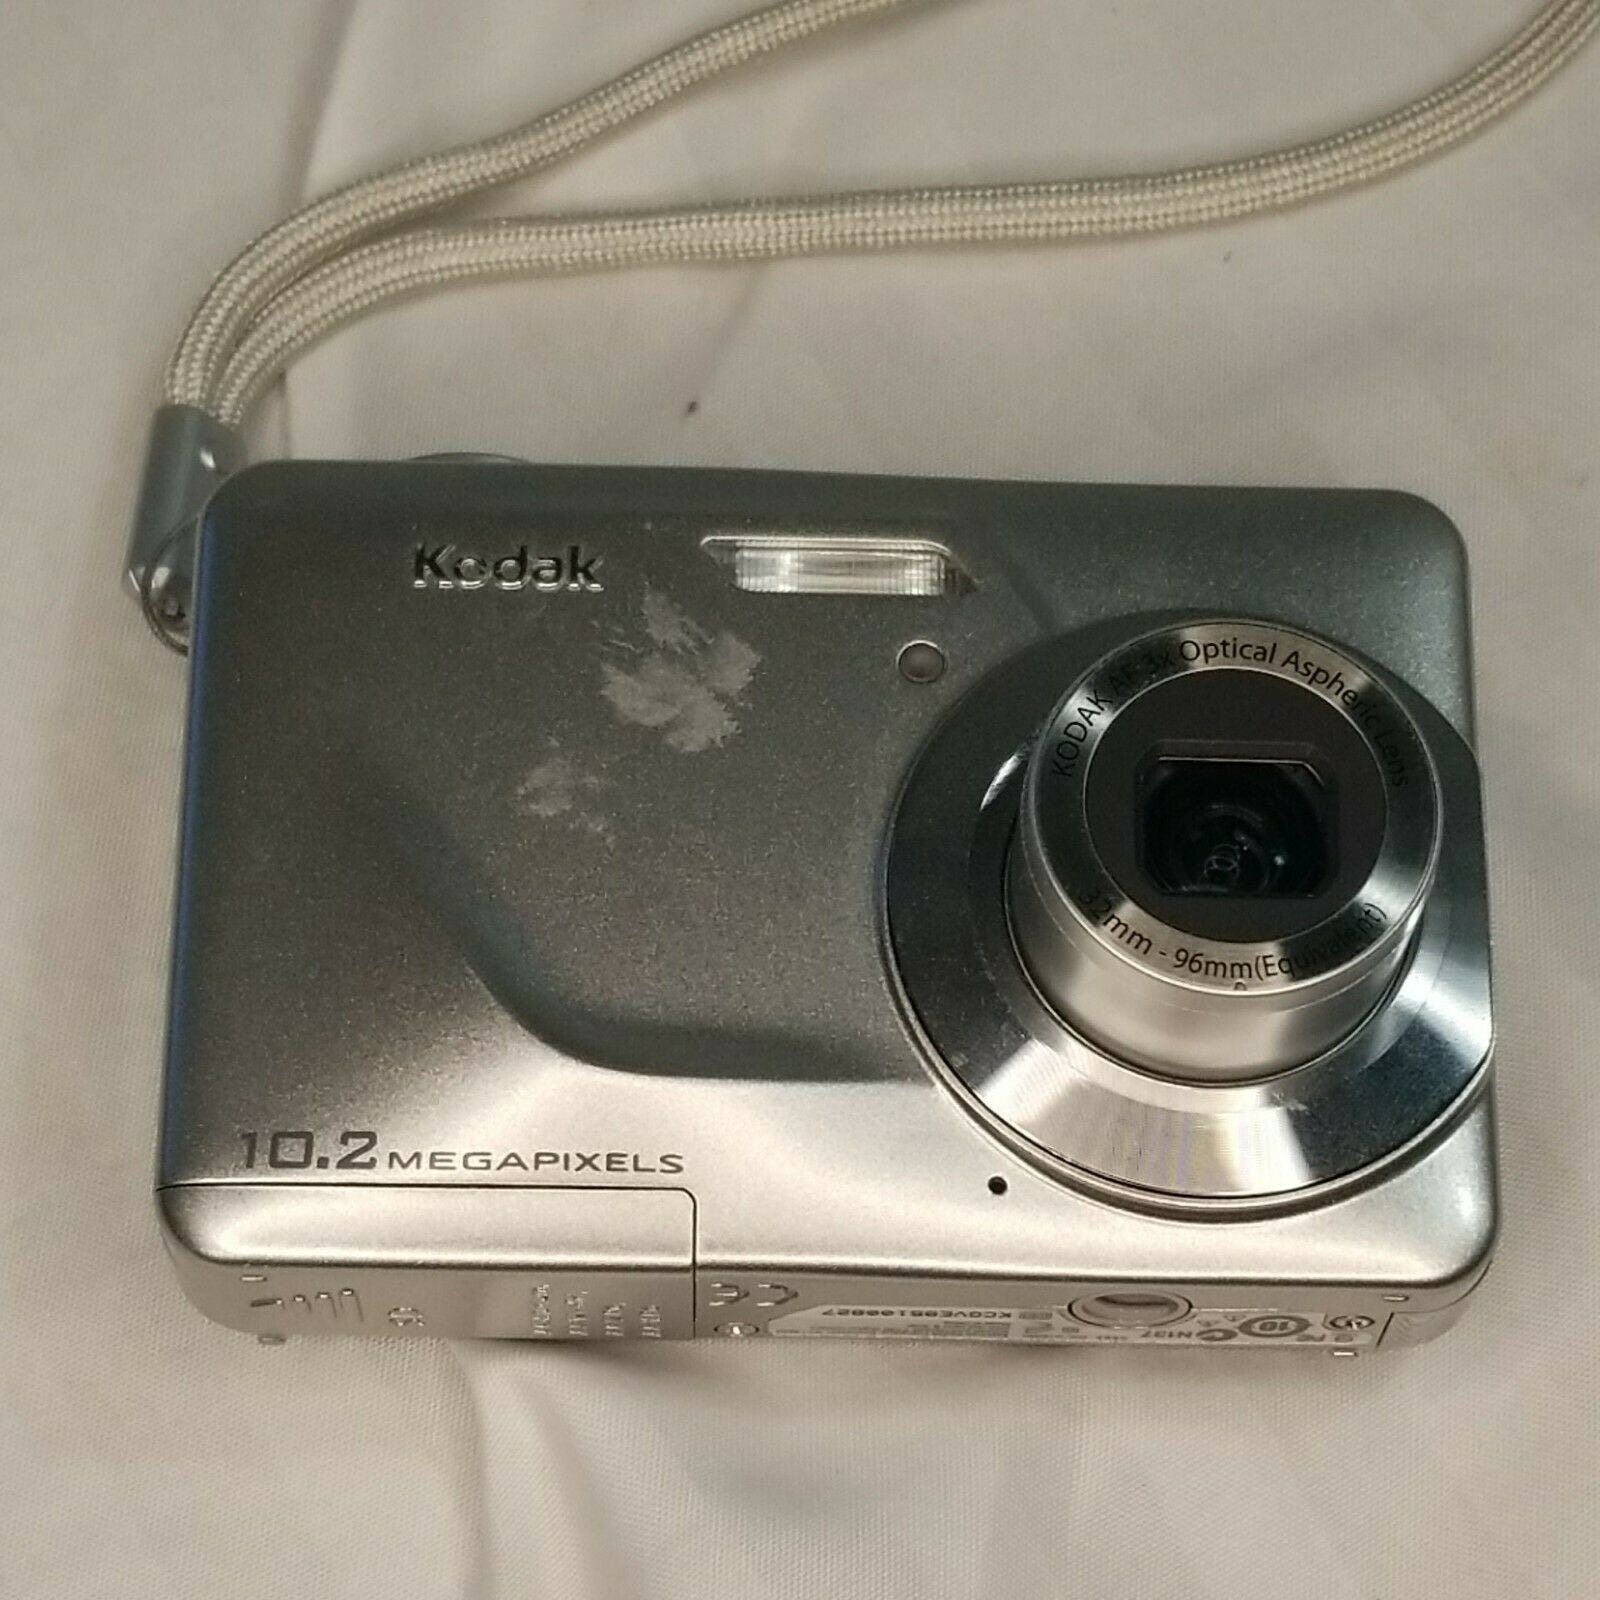 Kodak EasyShare C180 10.2MP Digital Camera - Silver